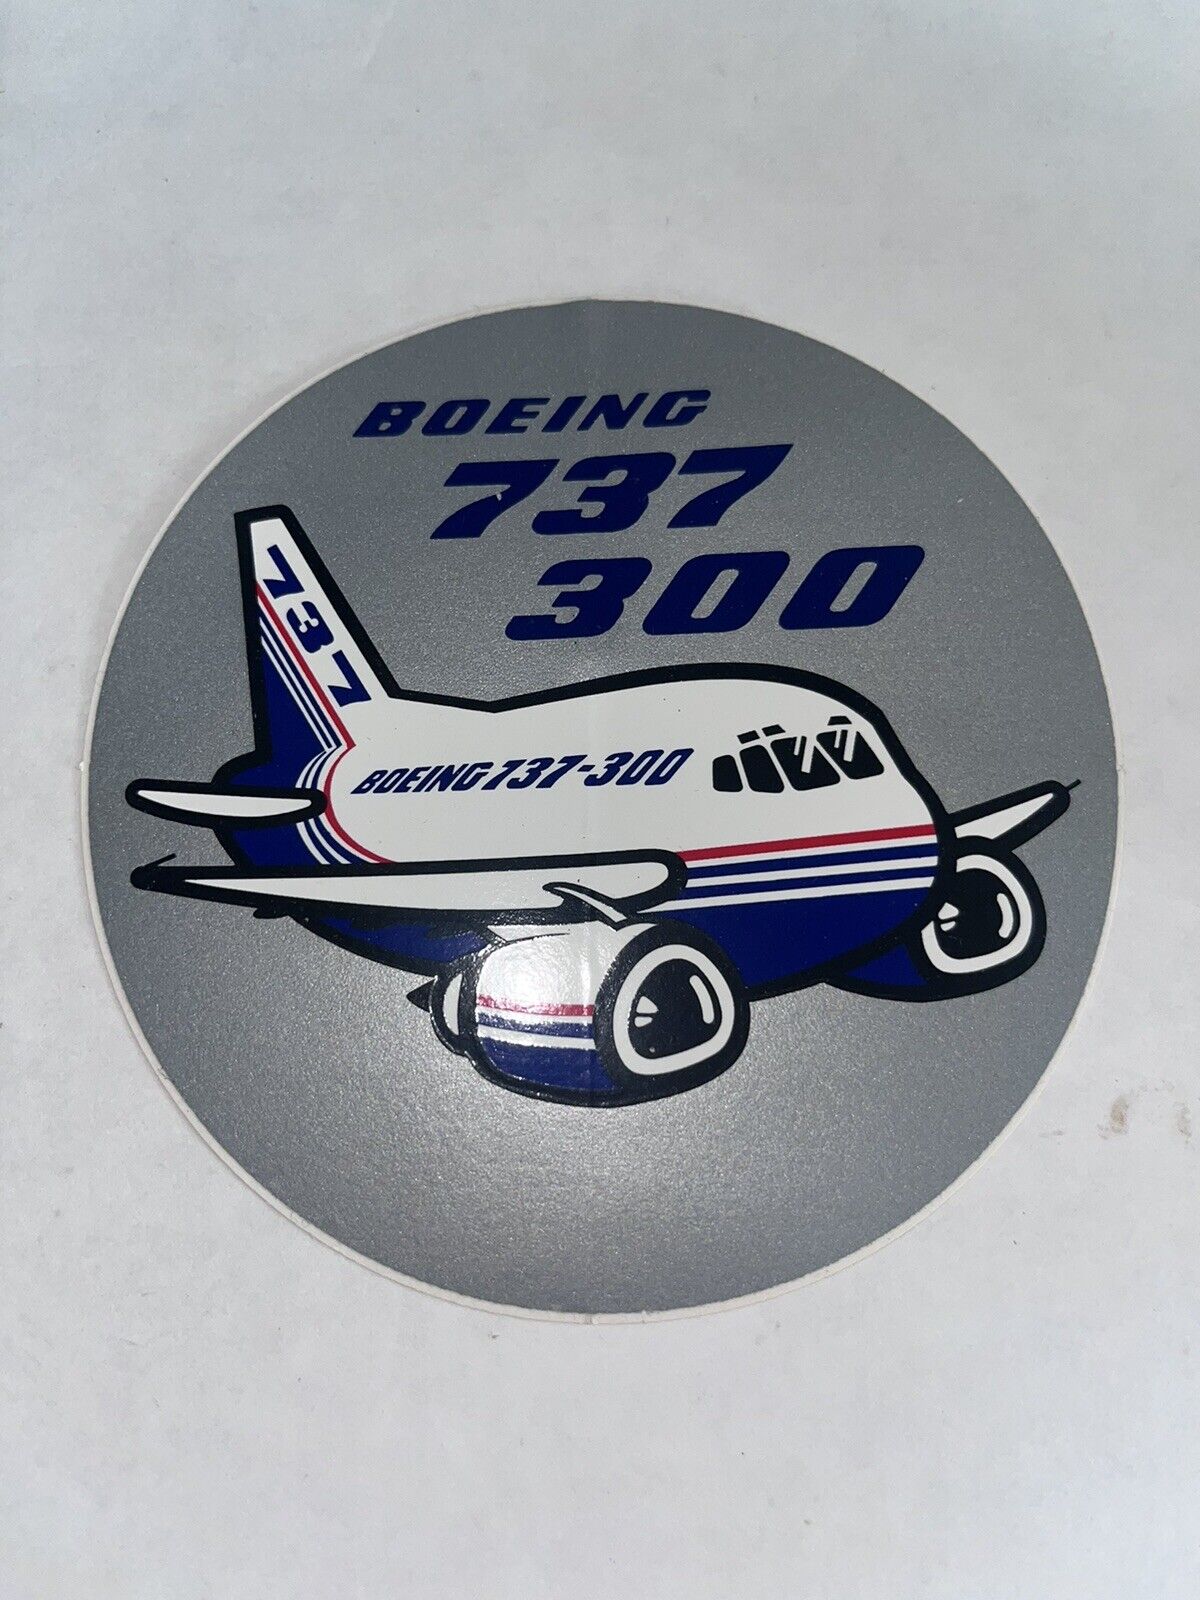 Vintage Boeing 757 4” Sticker Decal NOS Aviation Collectible